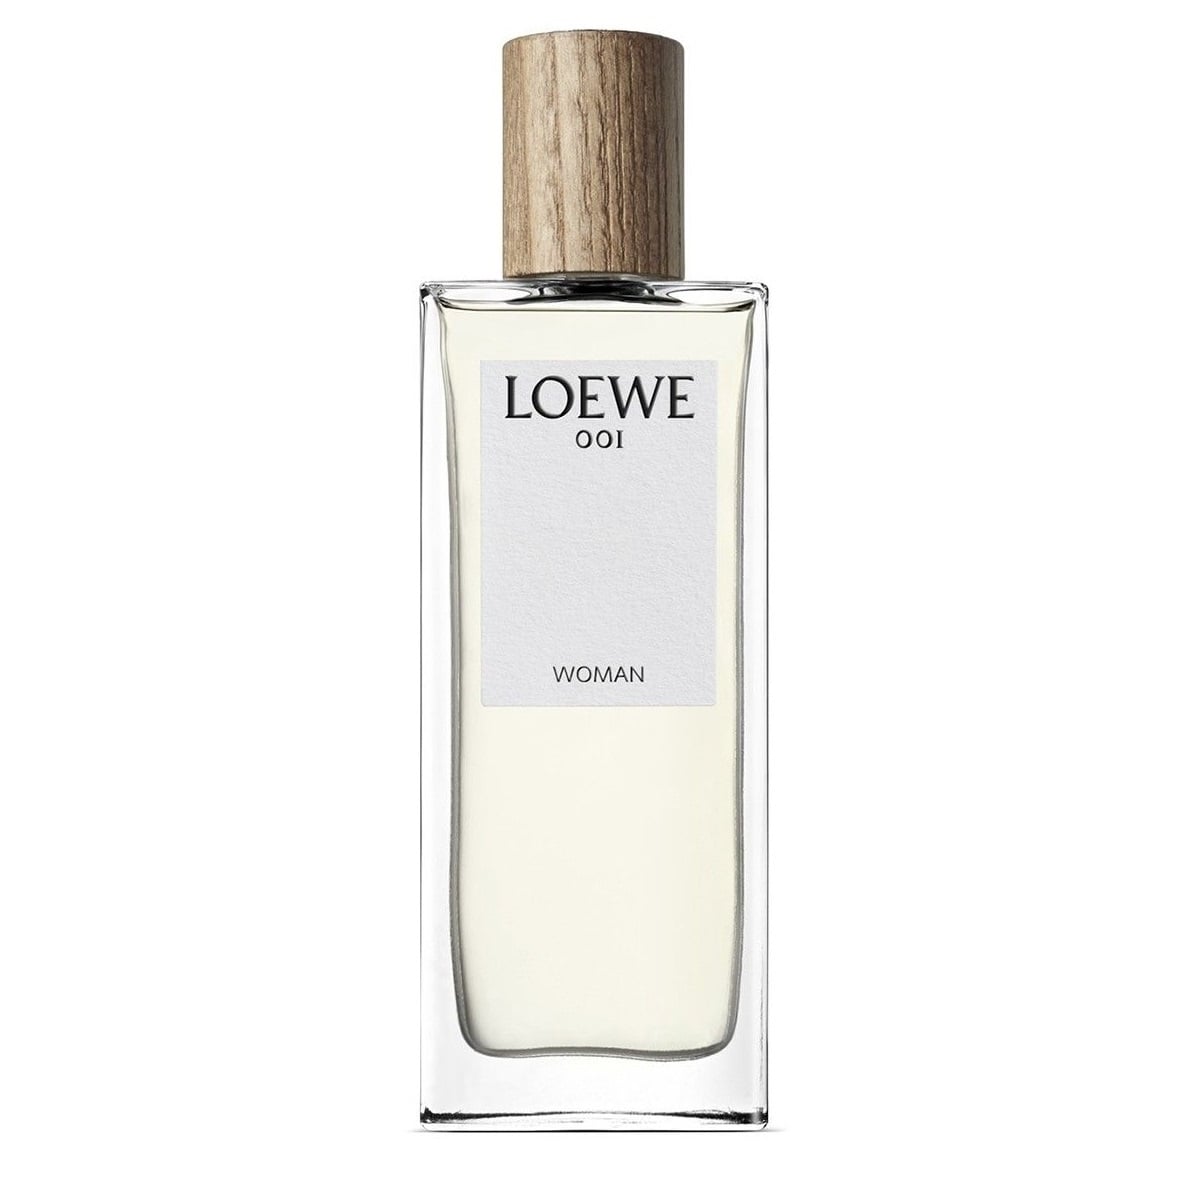 Celes (セレス) | Loewe - 001 Woman (ロエベ - 001 ウーマン)